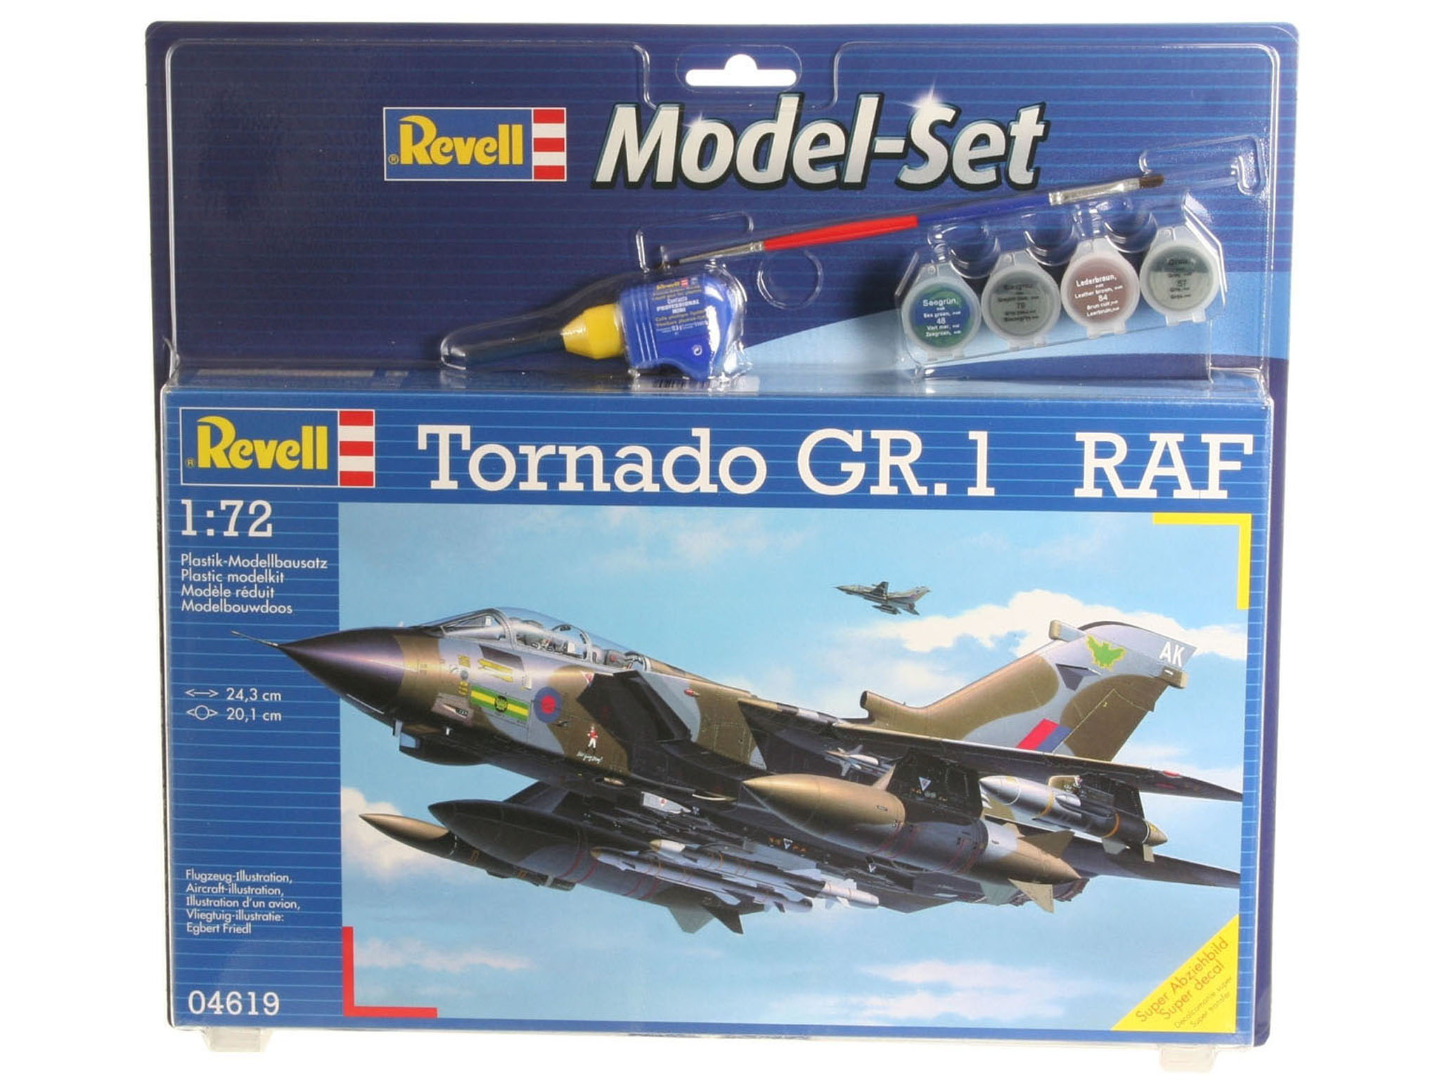 Revell Model Set Tornado GR.1 RAF Scale 1:72